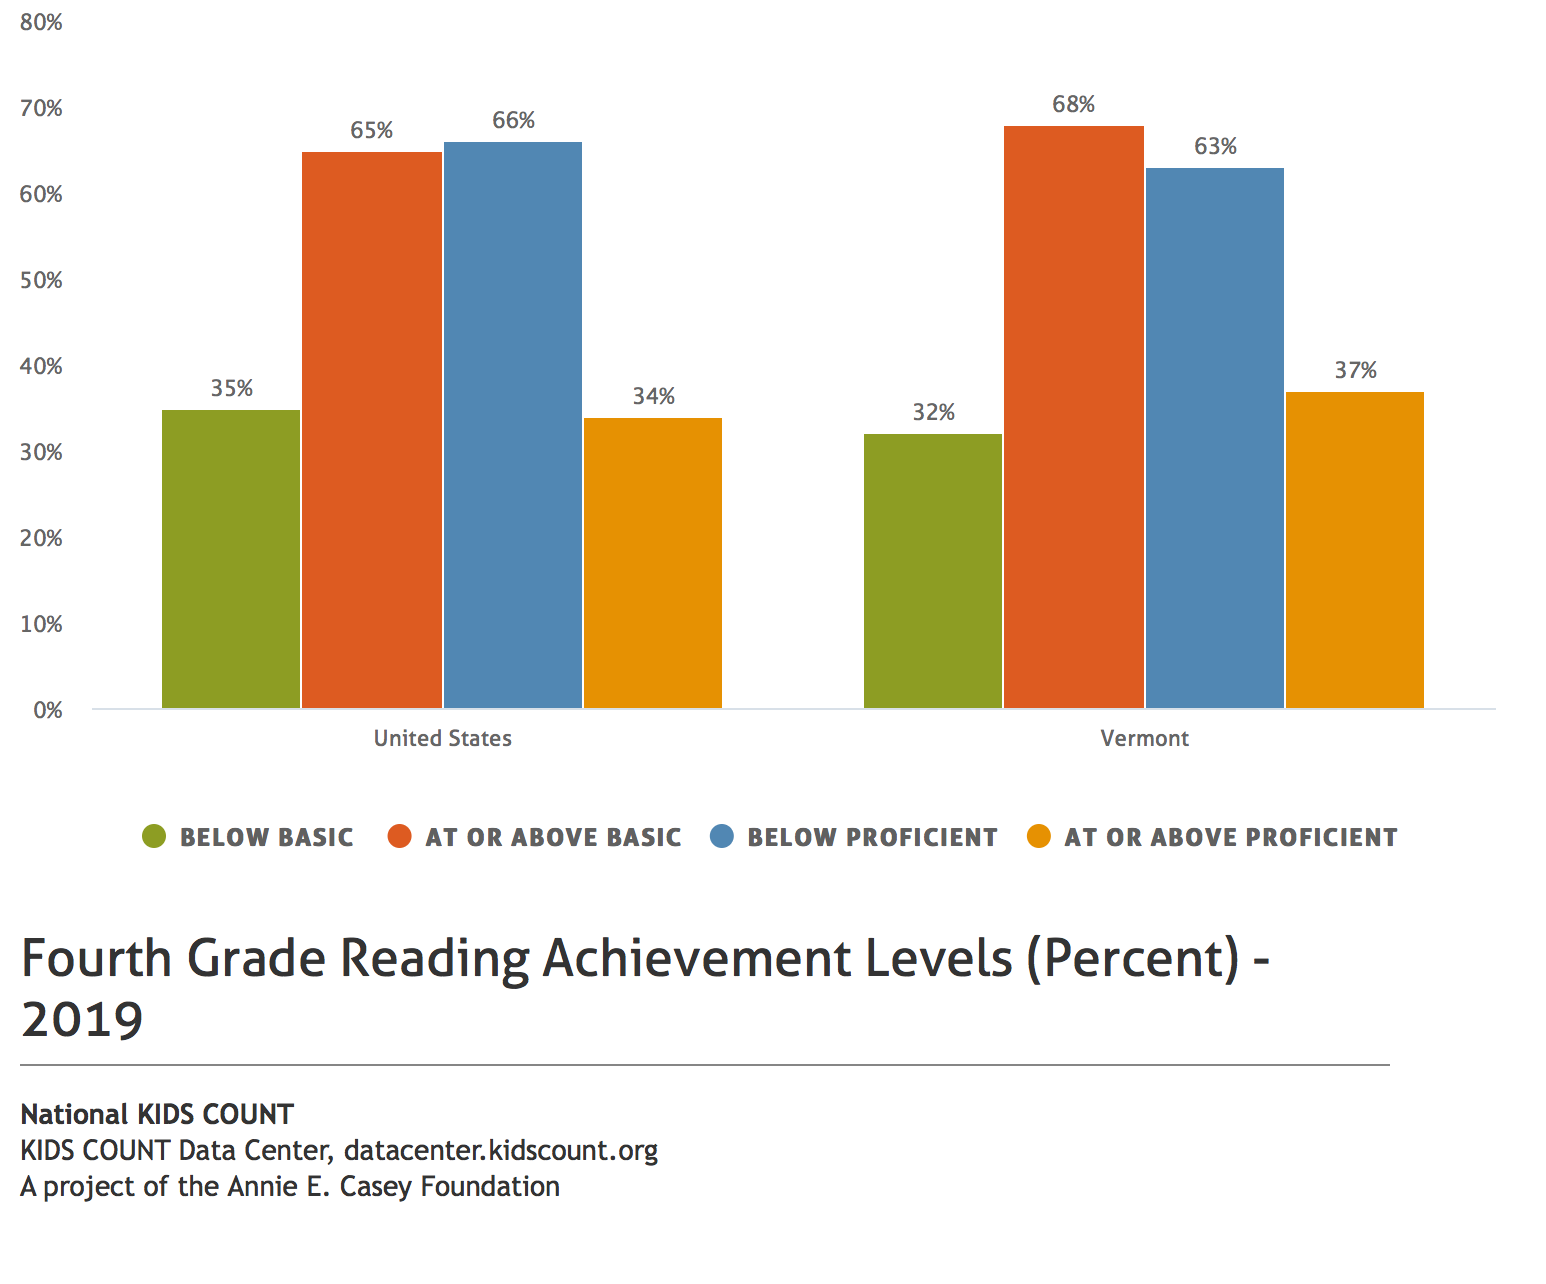 Fourth grade reading achievement levels